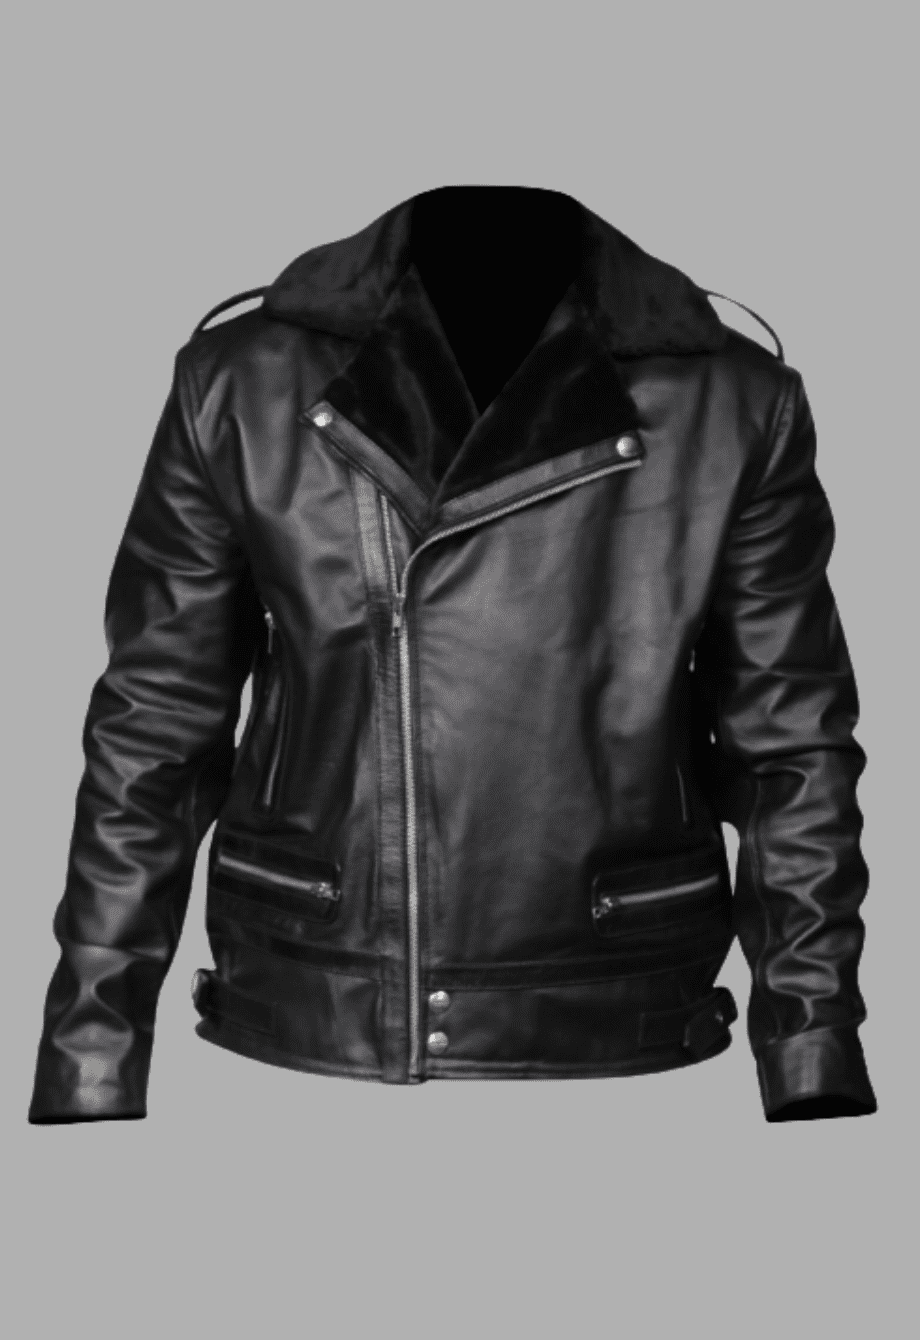 Menâ€™s Asymmetrical Zipper Black Fur Lined Jacket - Walmart.com